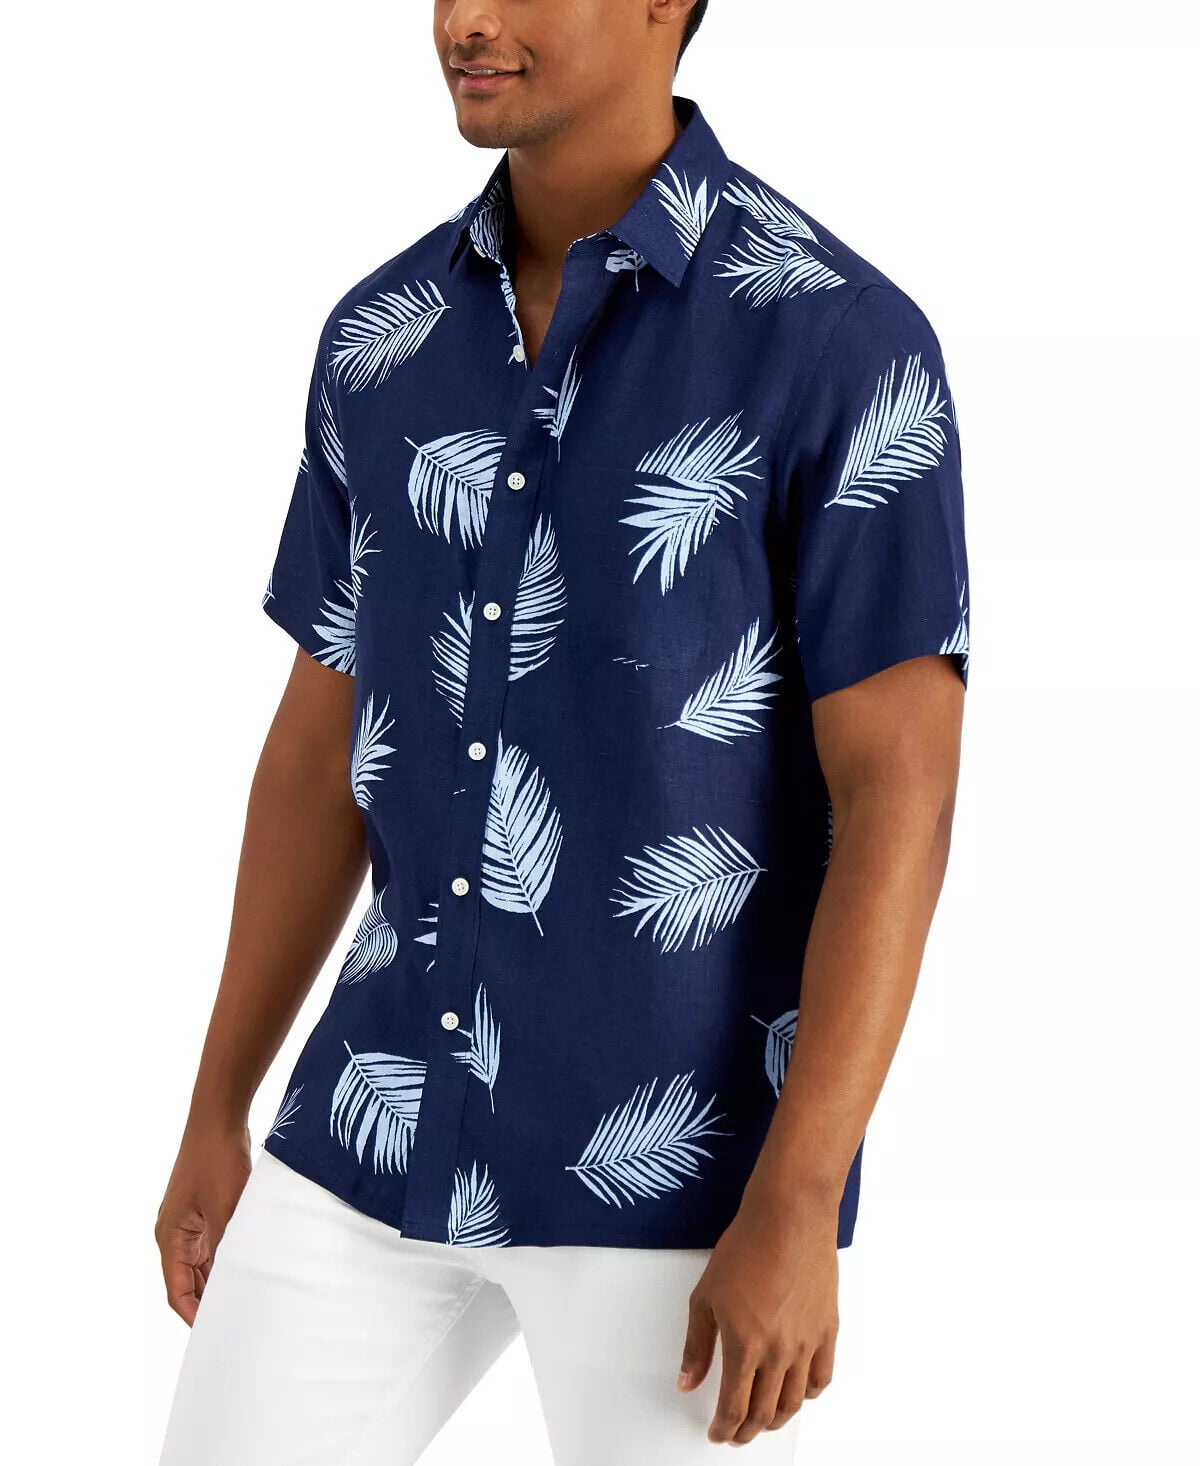 Club Room Luxury Men's Frond-Print Linen Shirt Navy Blue Combo-Small